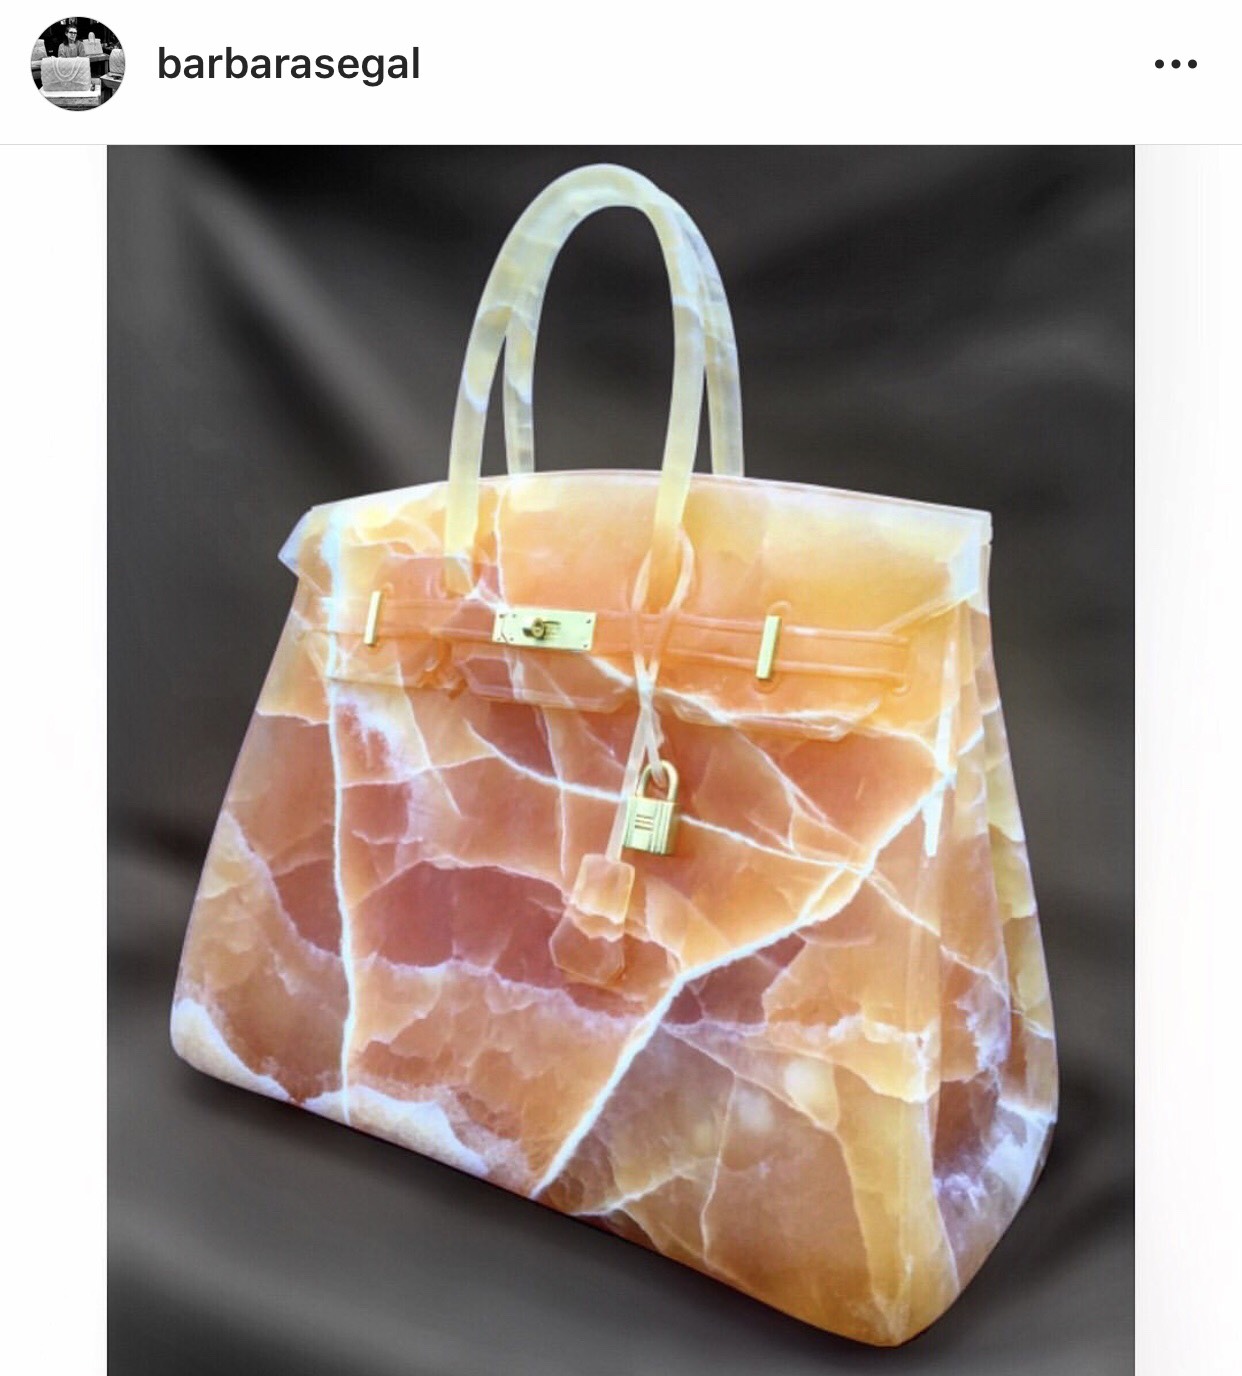 birkin bag made of